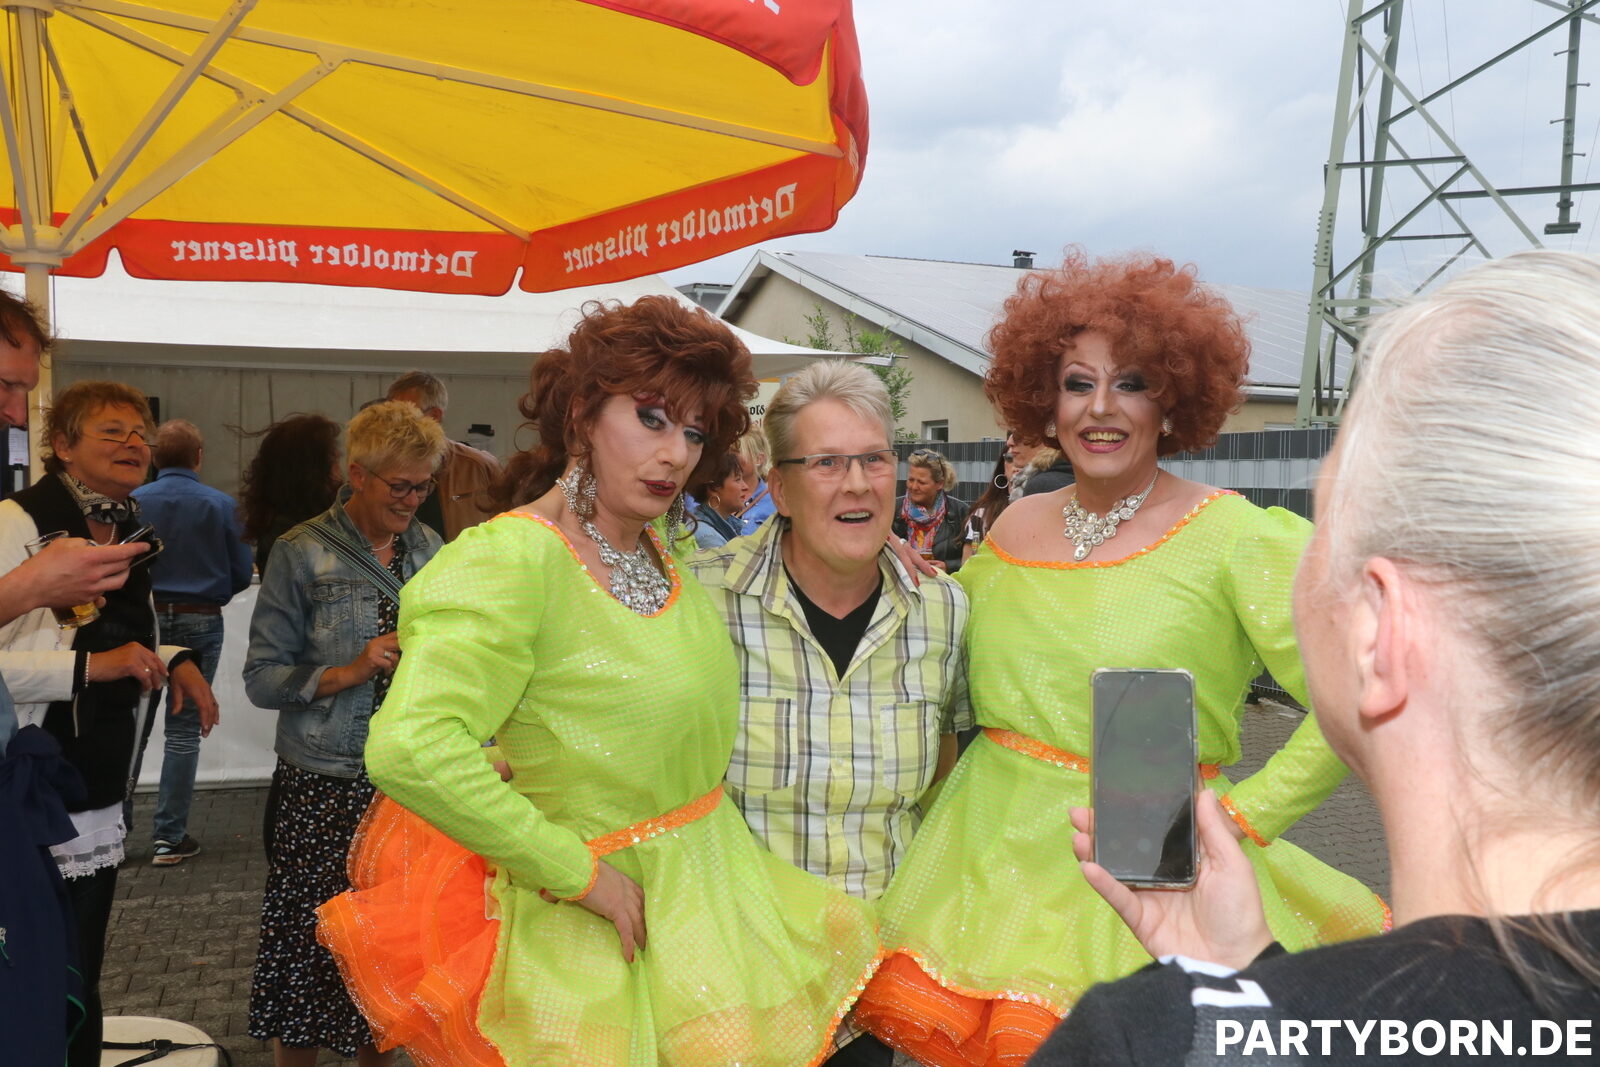 Pader Schlager Party - Paderborn, Krenz, 26.05.2022